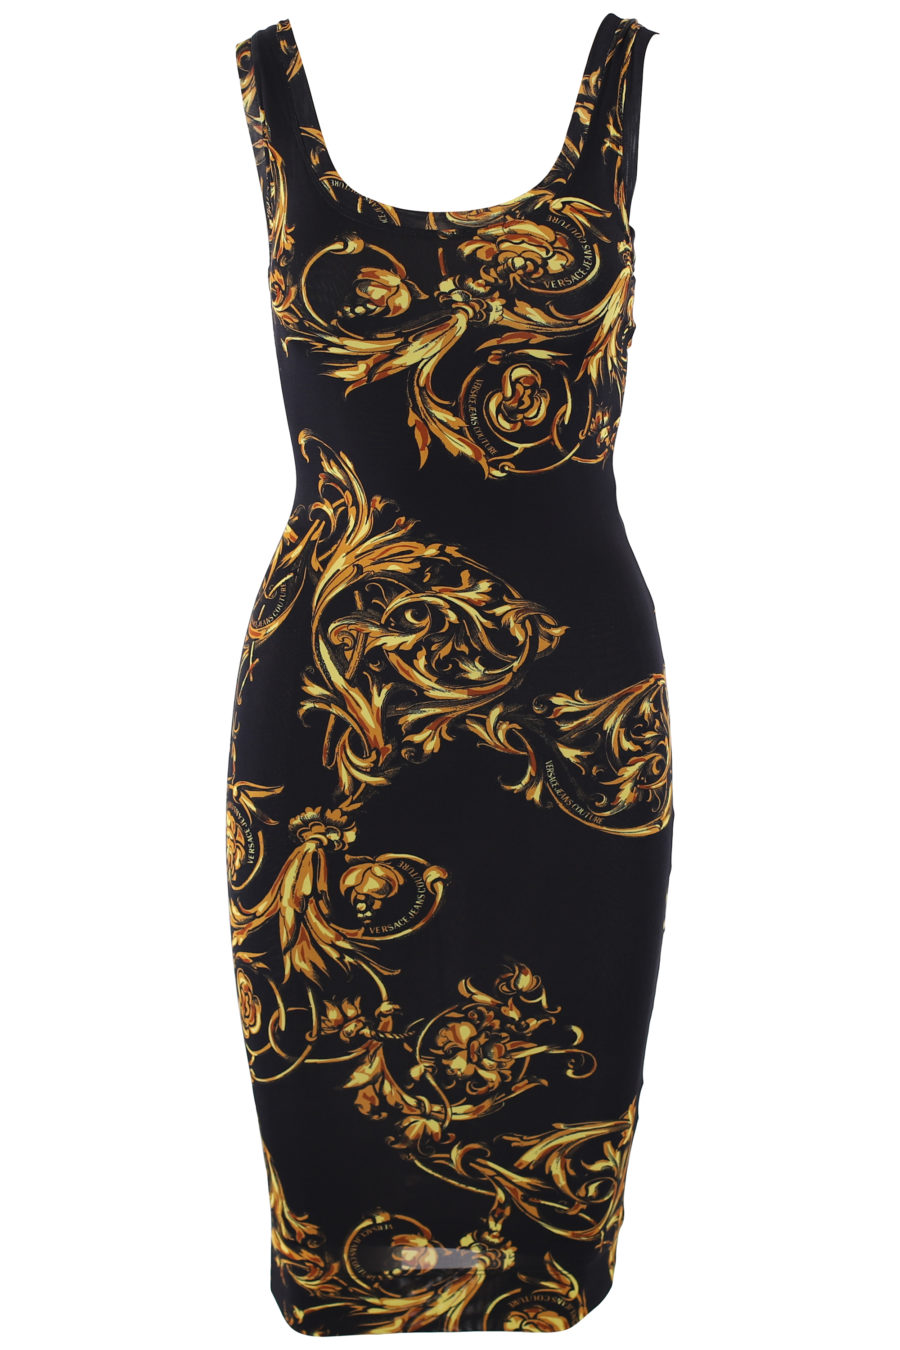 Black elastic dress with baroque print - IMG 1269